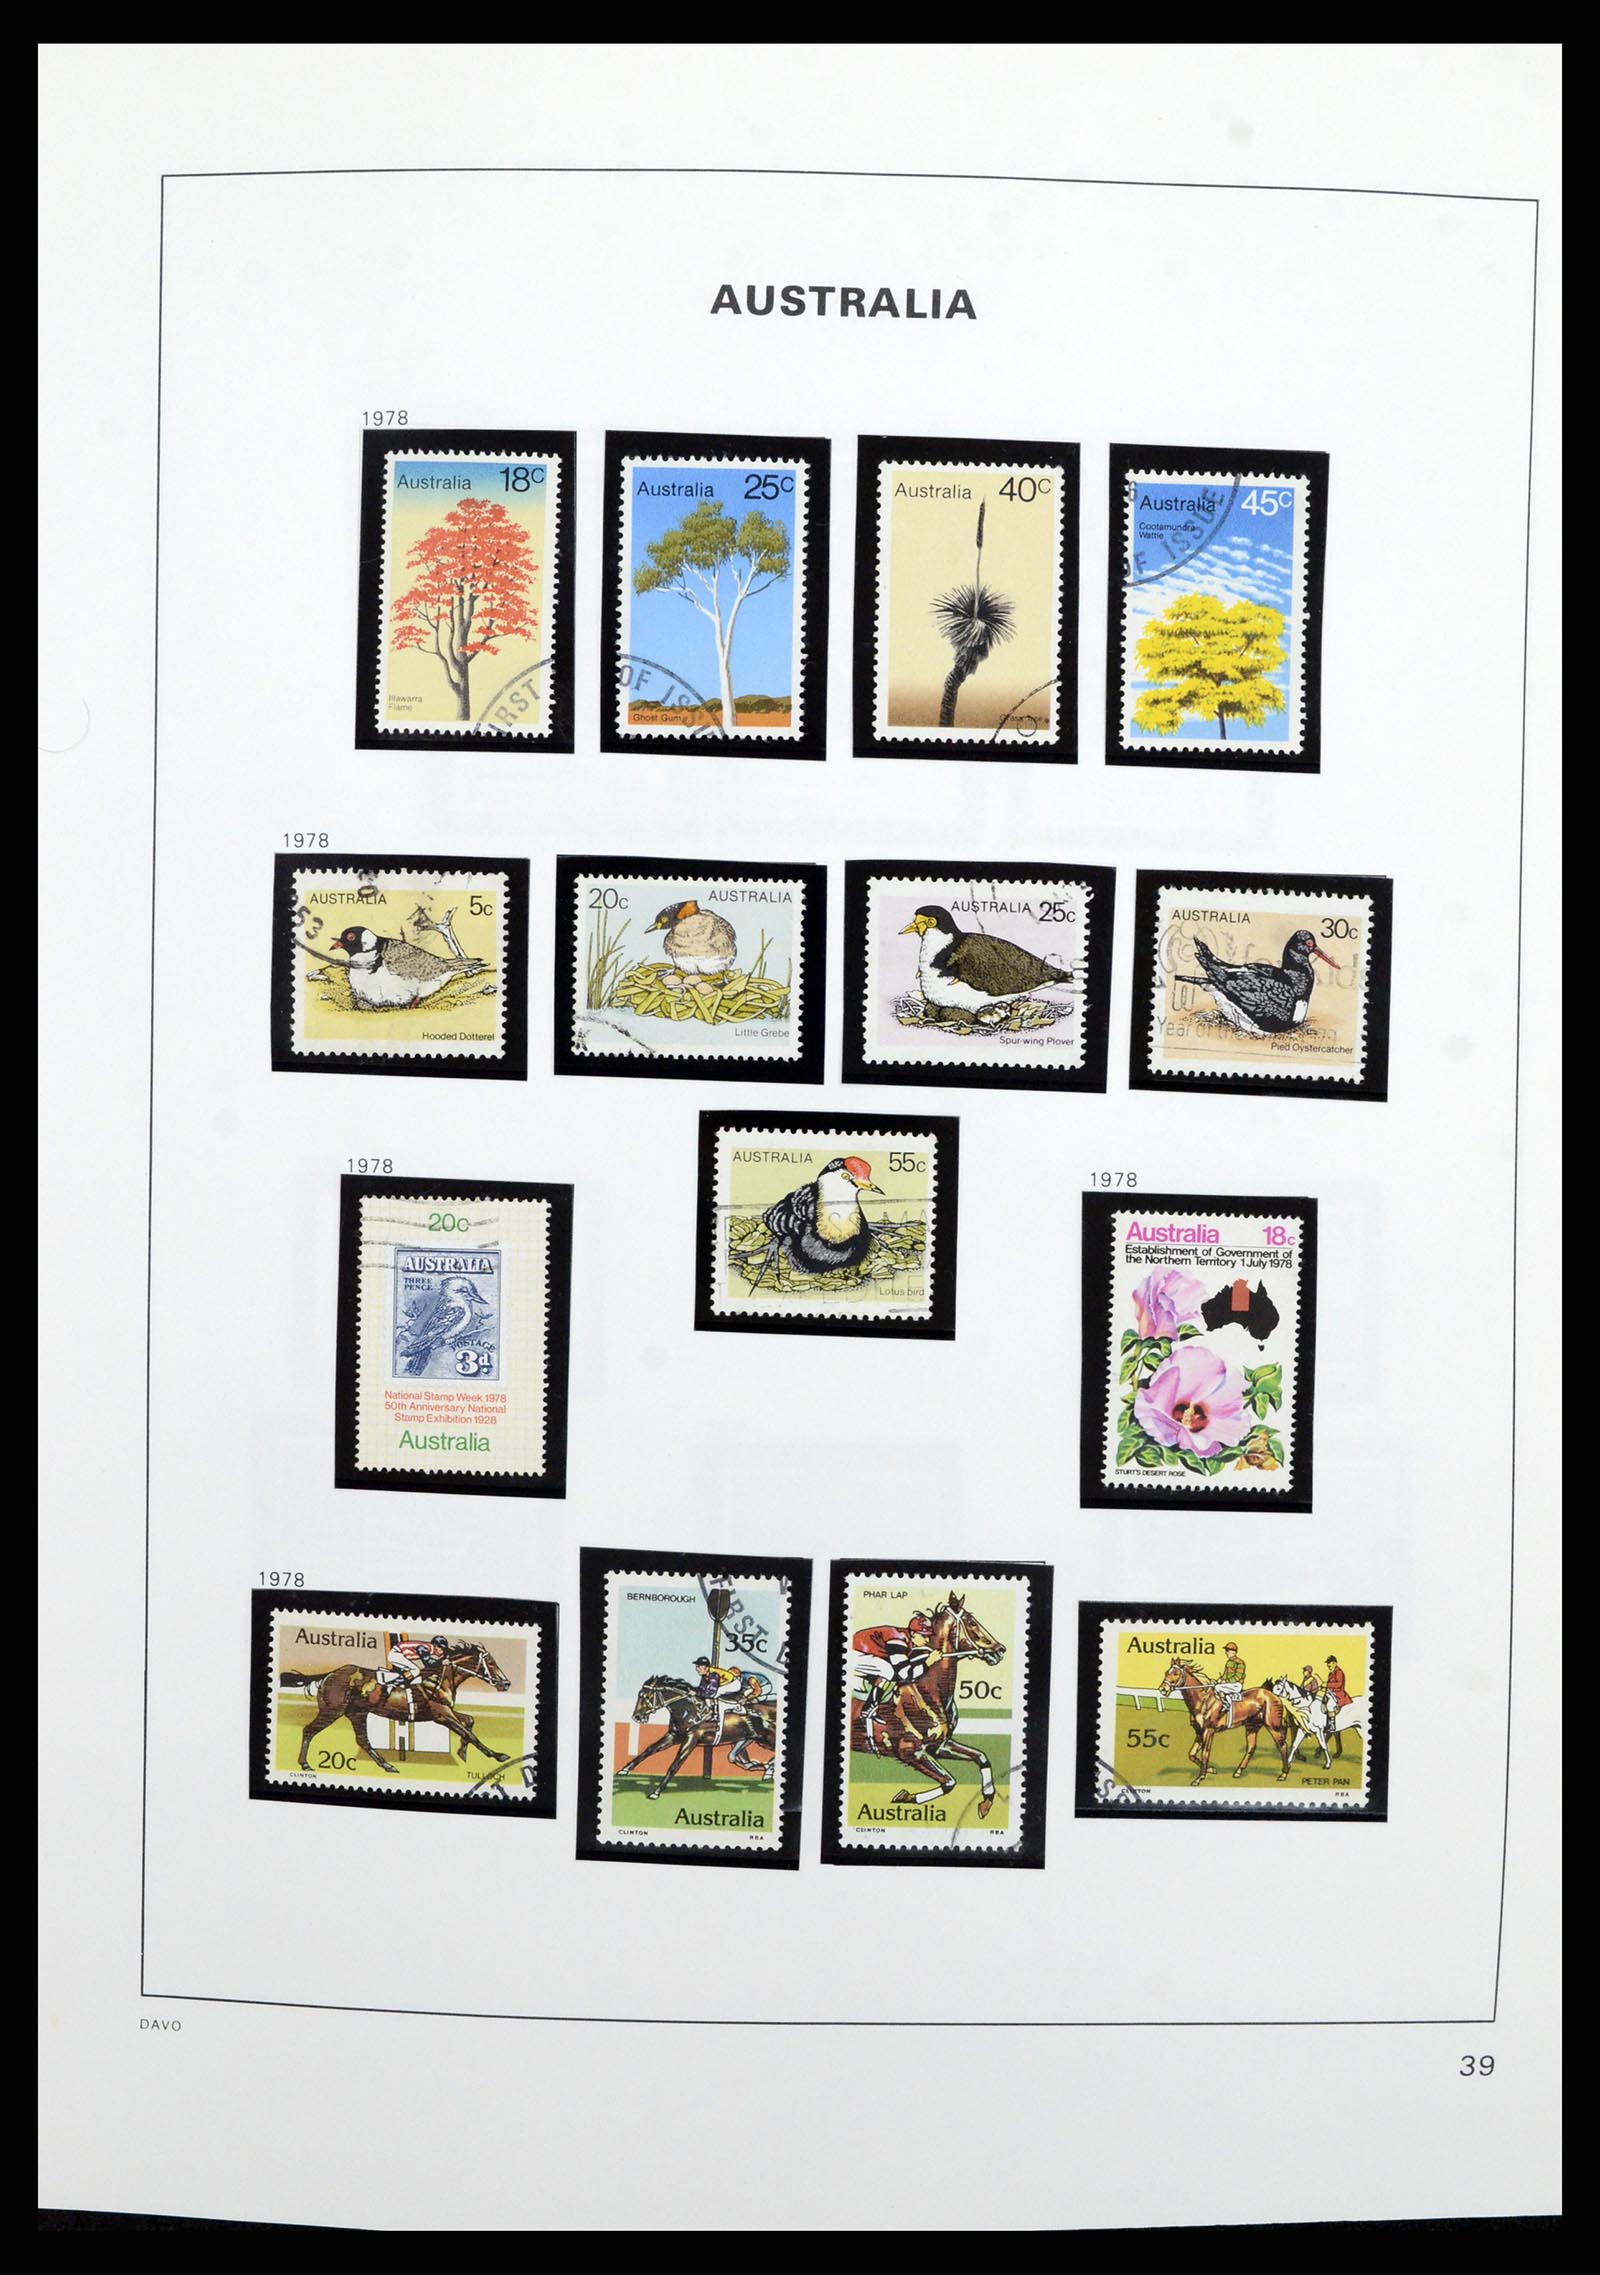 37085 045 - Stamp collection 37085 Australia 1913-2018!